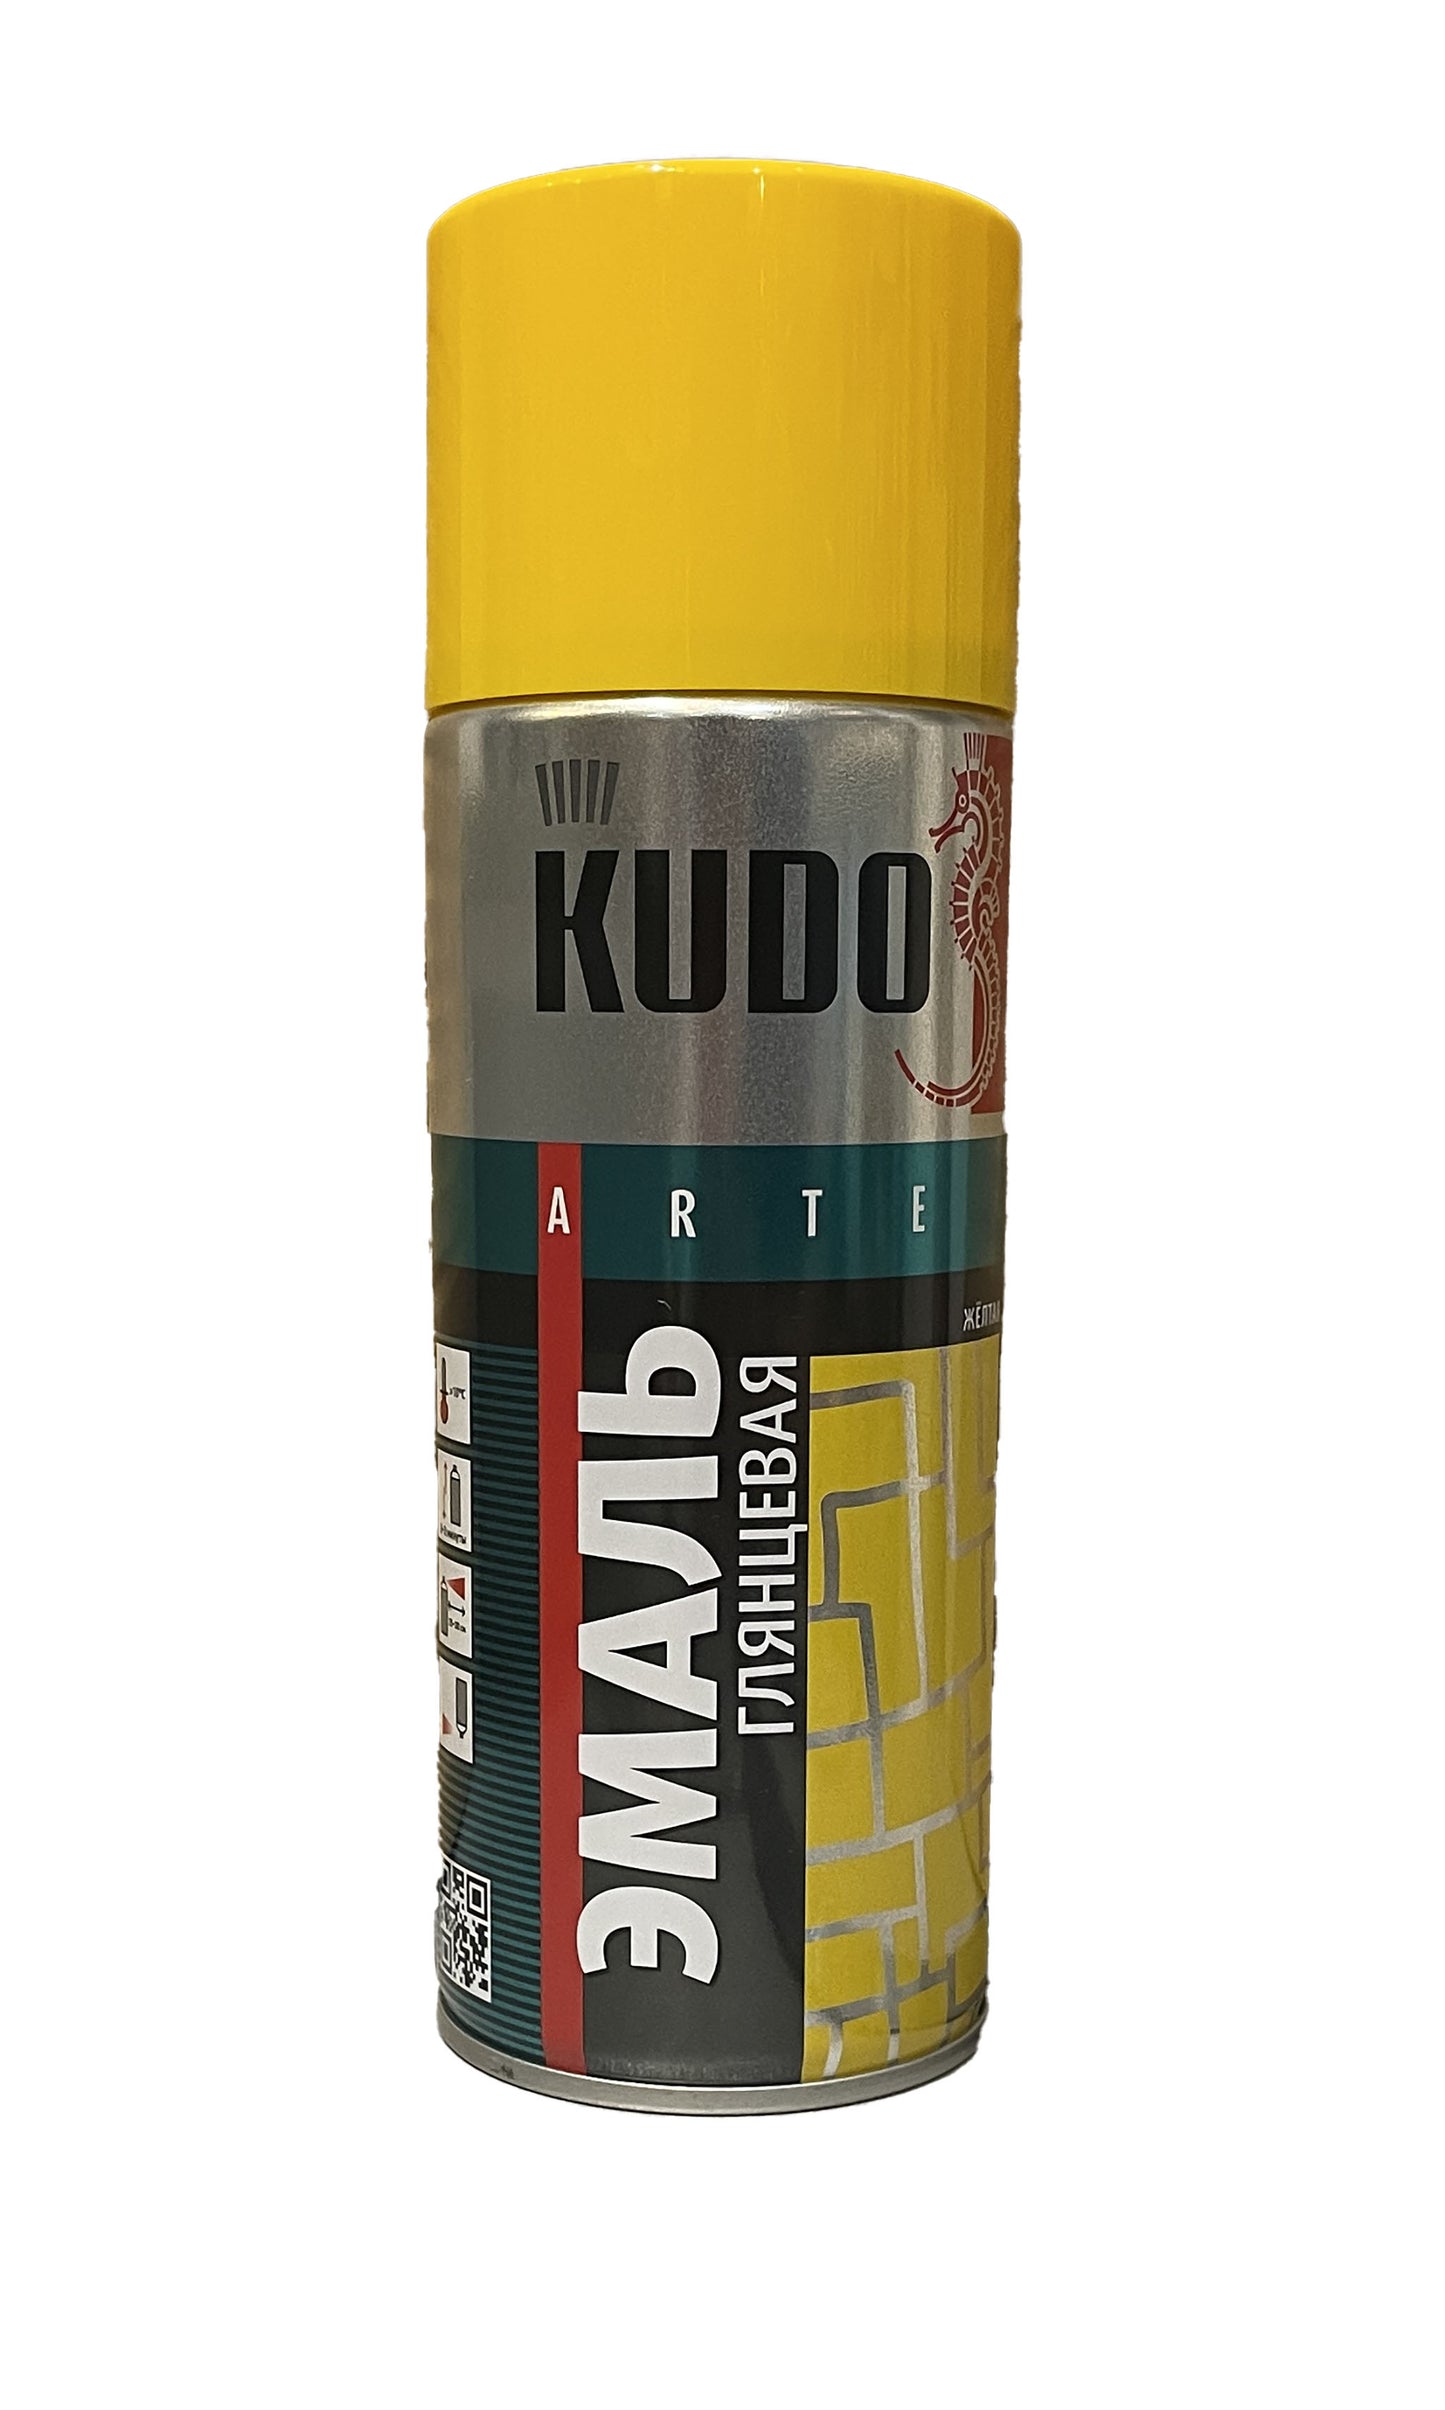 KU-1013 - аэрозольная алкидная эмаль, цвет: желтый глянцевый RAL 1018, баллон: 520 мл.